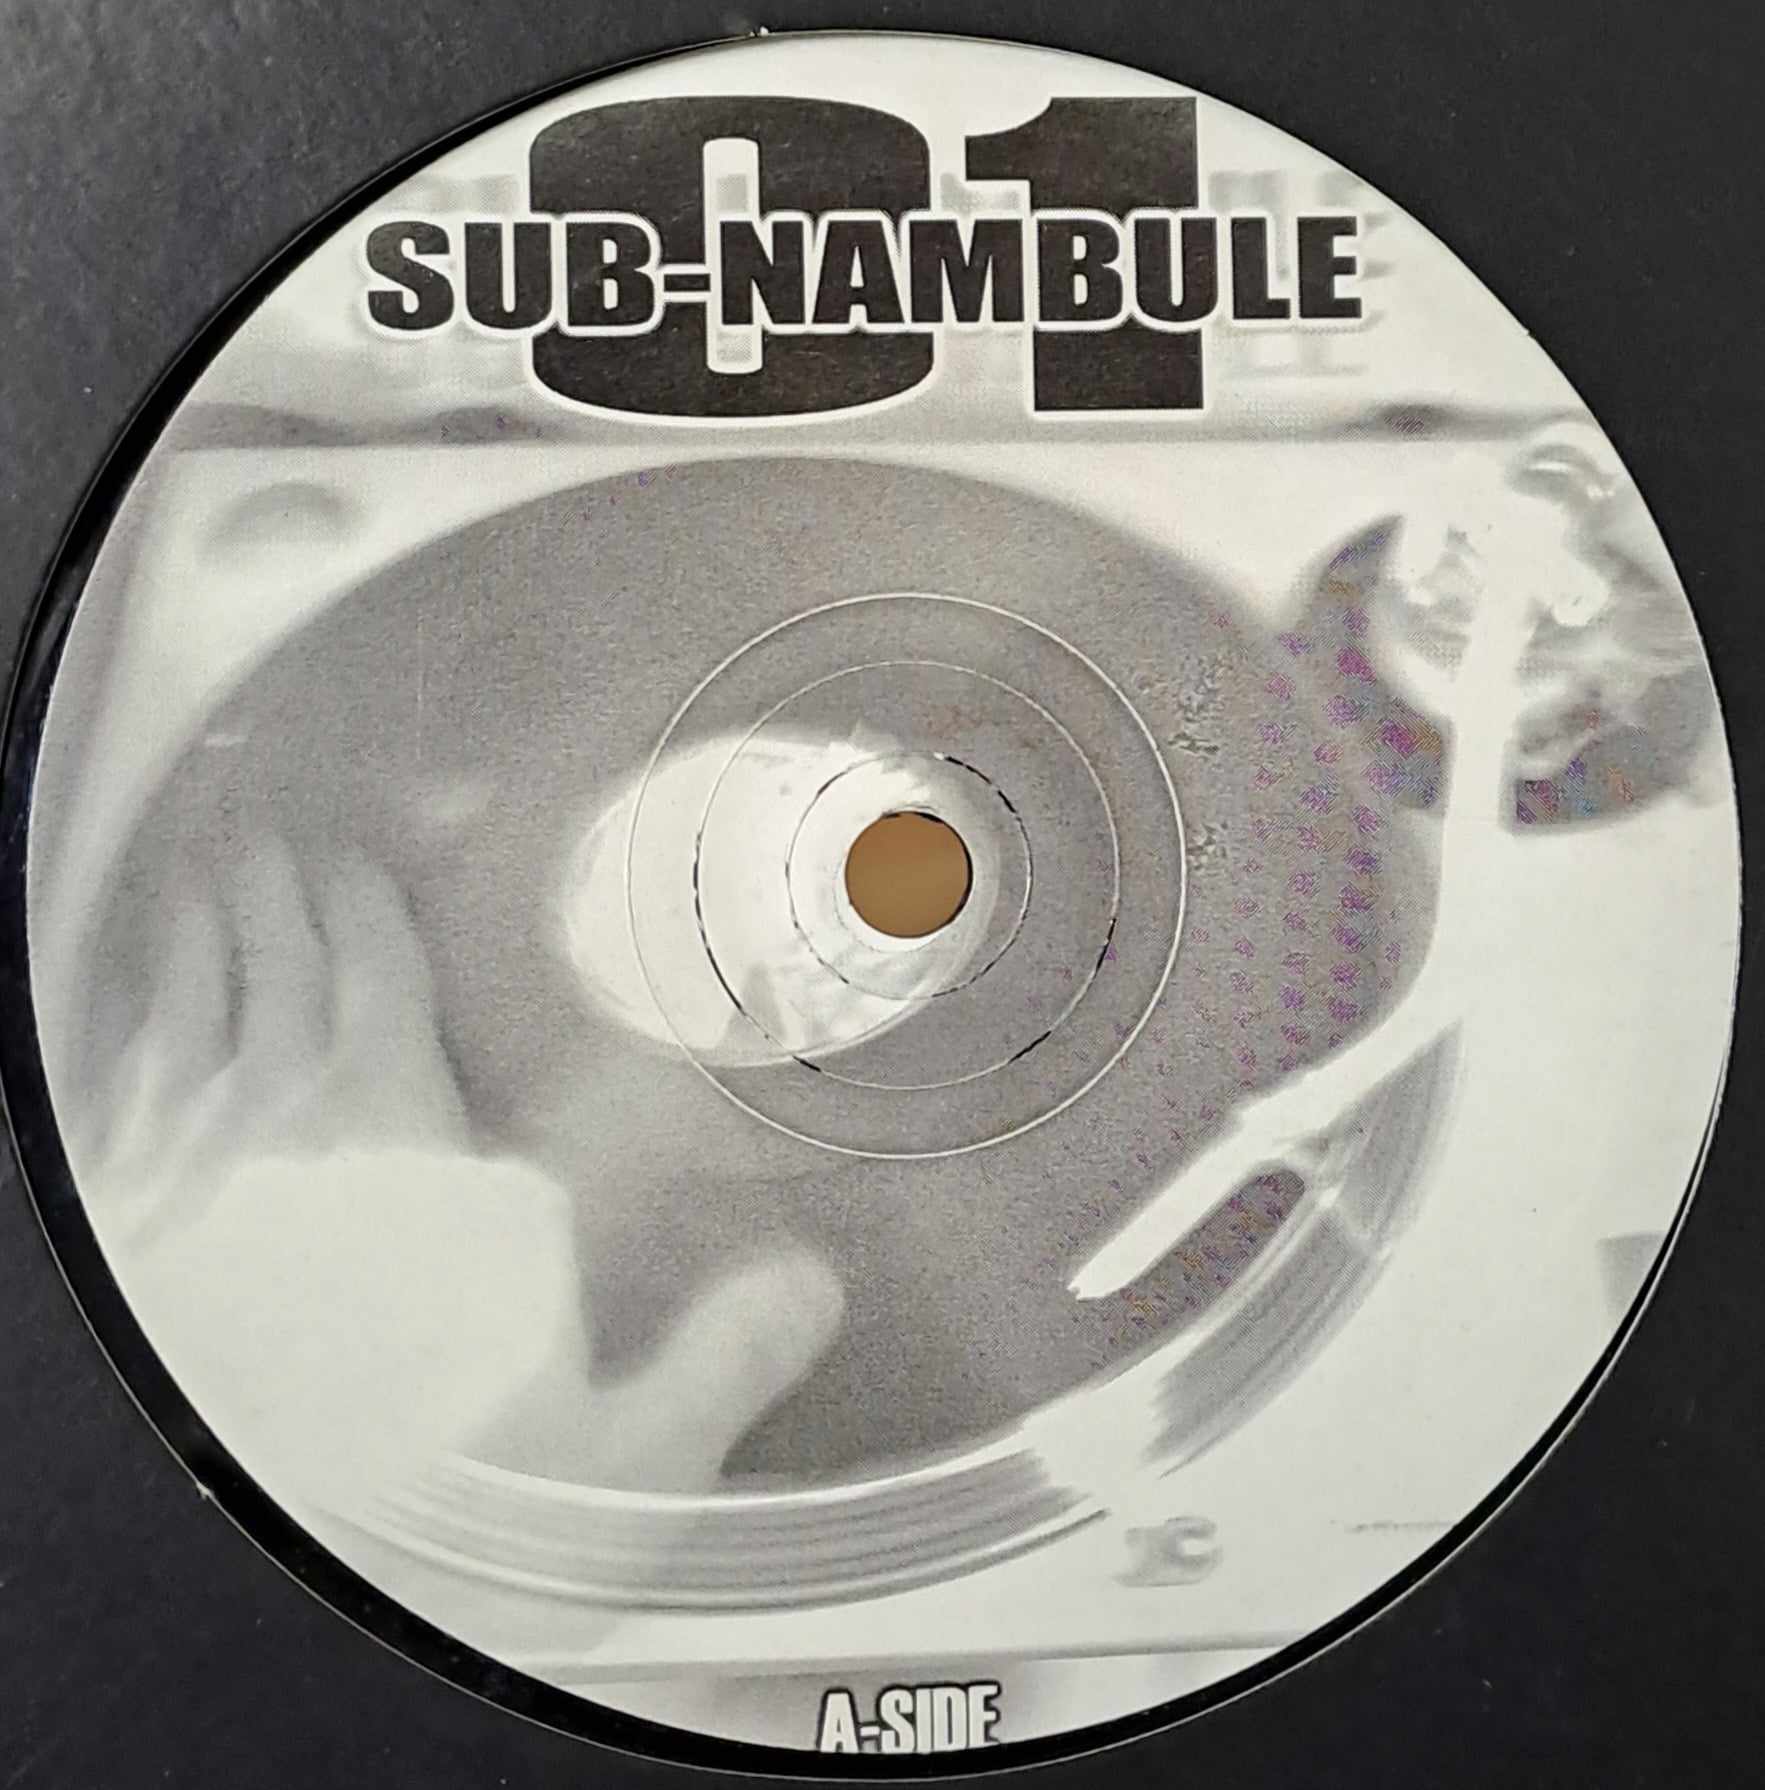 Sub-nambule 01 - vinyle freetekno